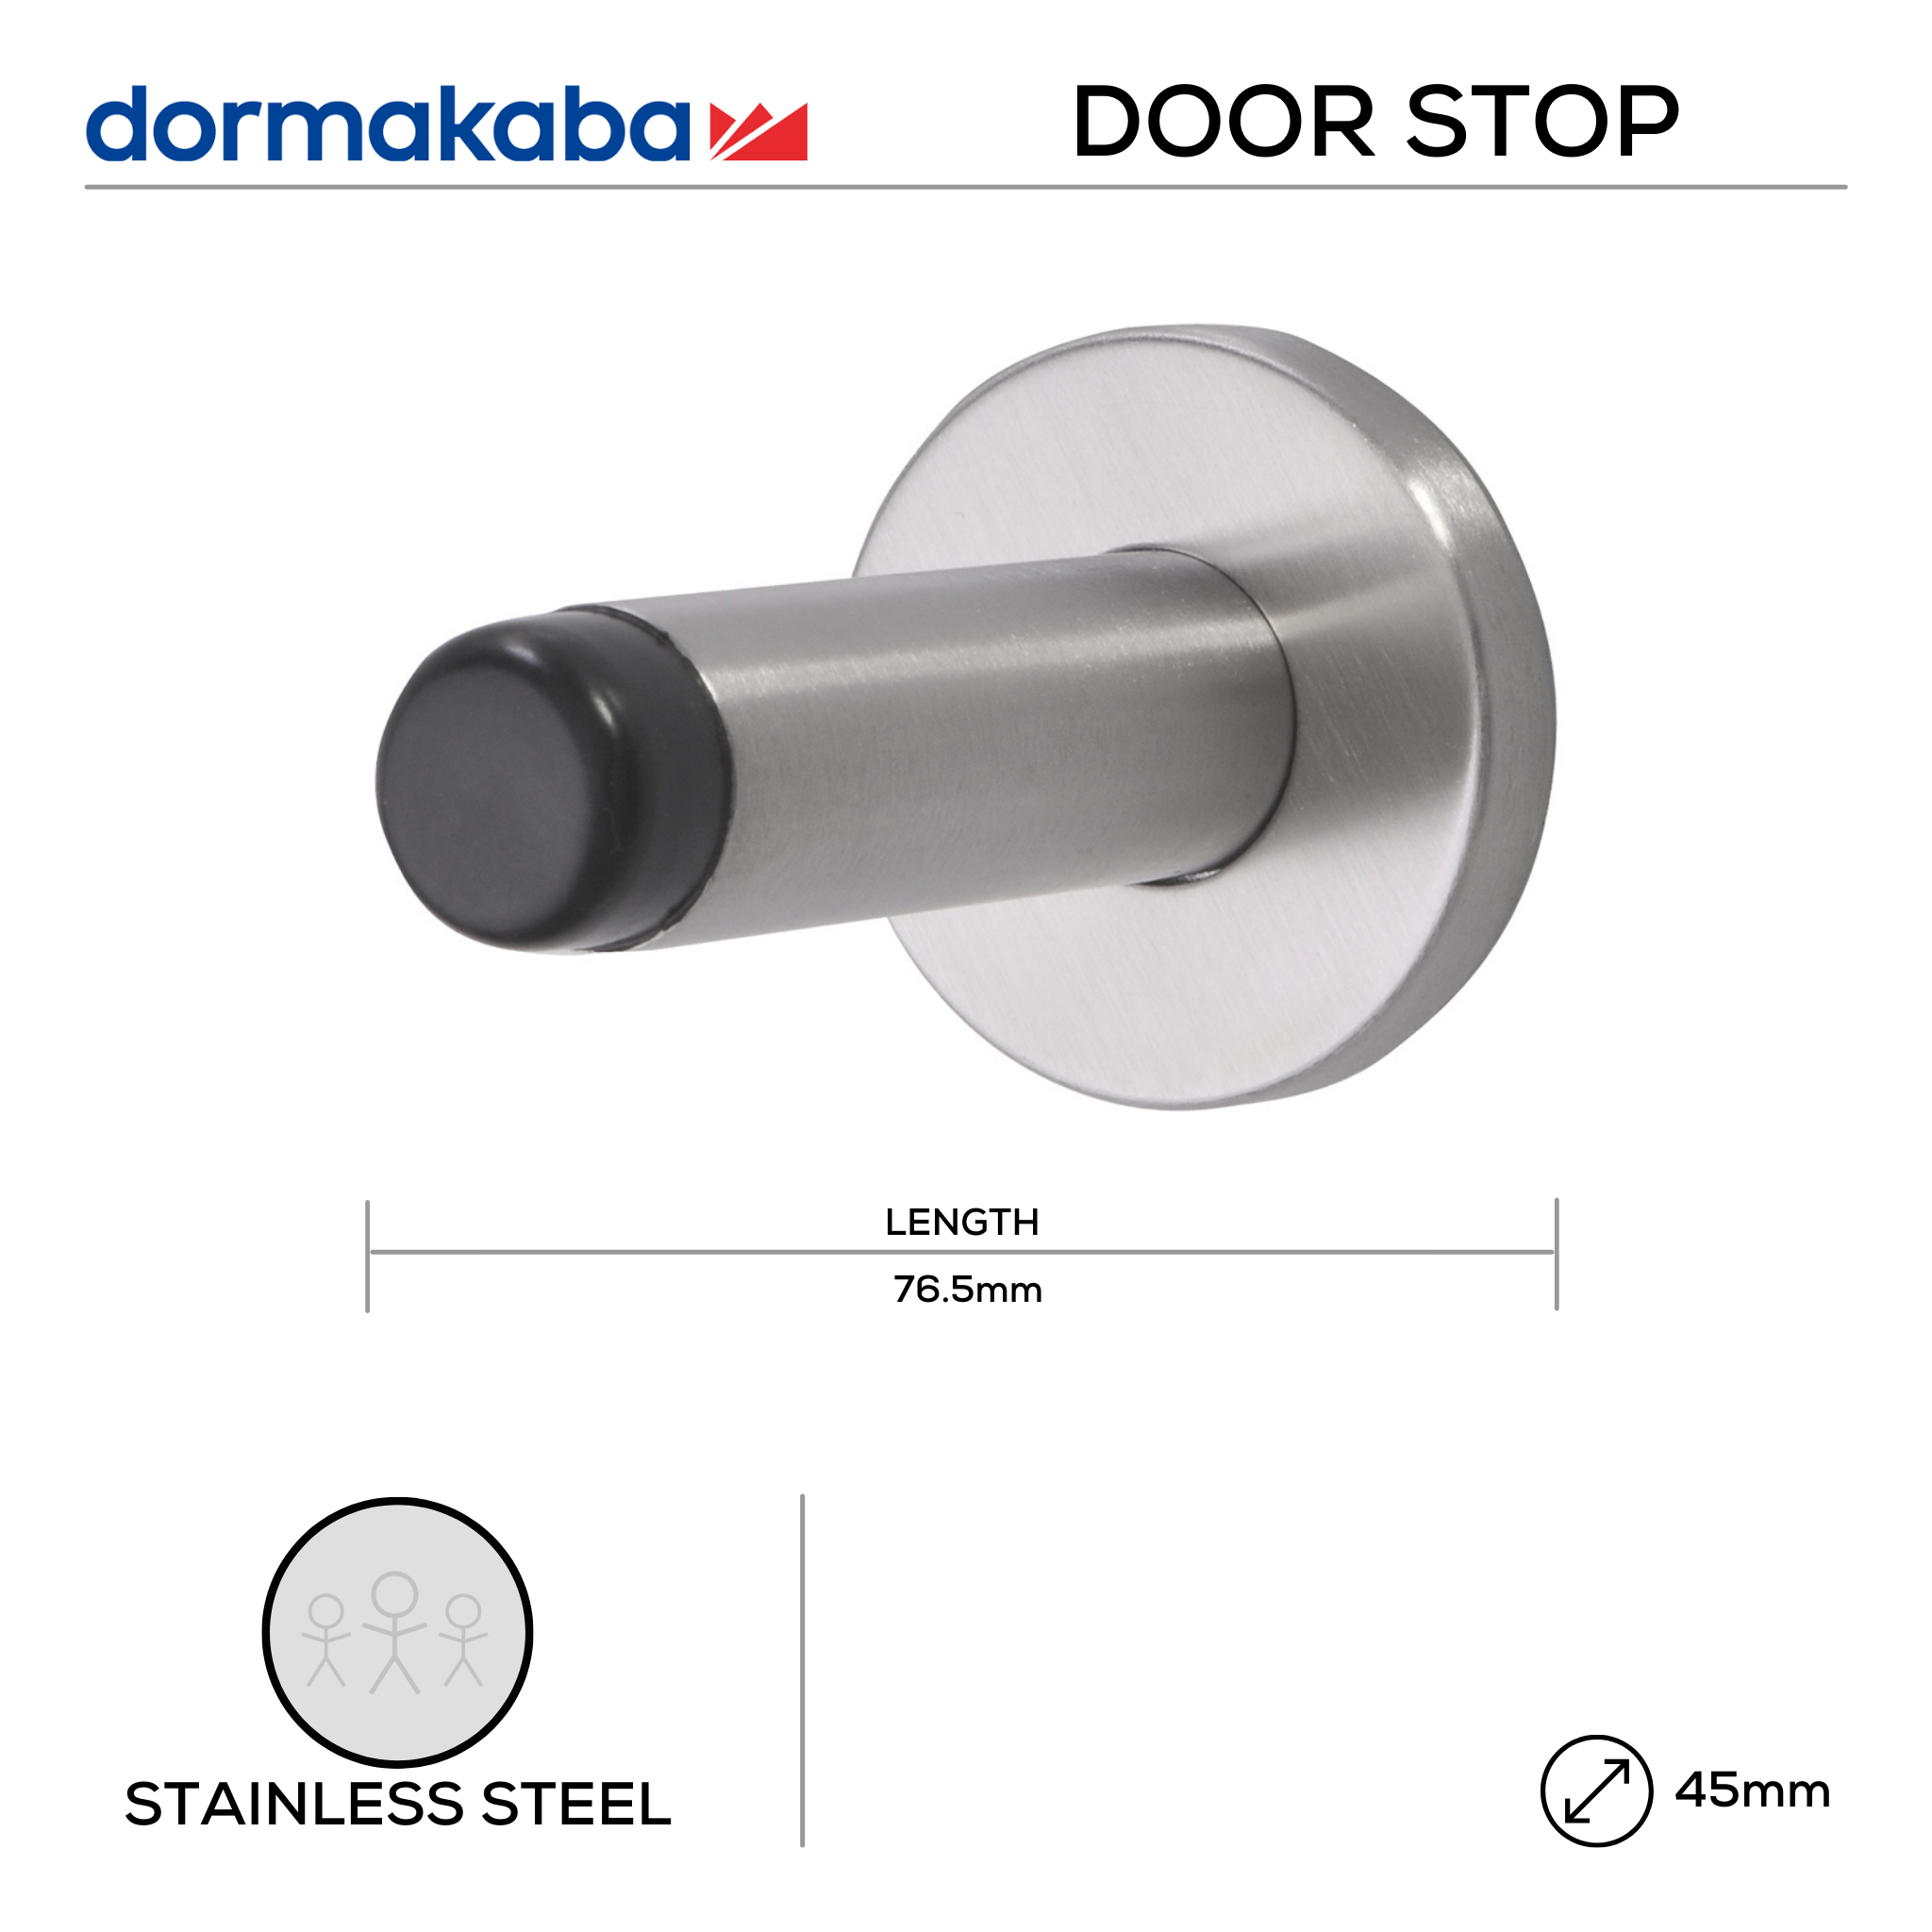 DDH-SS-020, Door Stop, 76.5mm (l) x 45mm (Ø), Stainless Steel, DORMAKABA